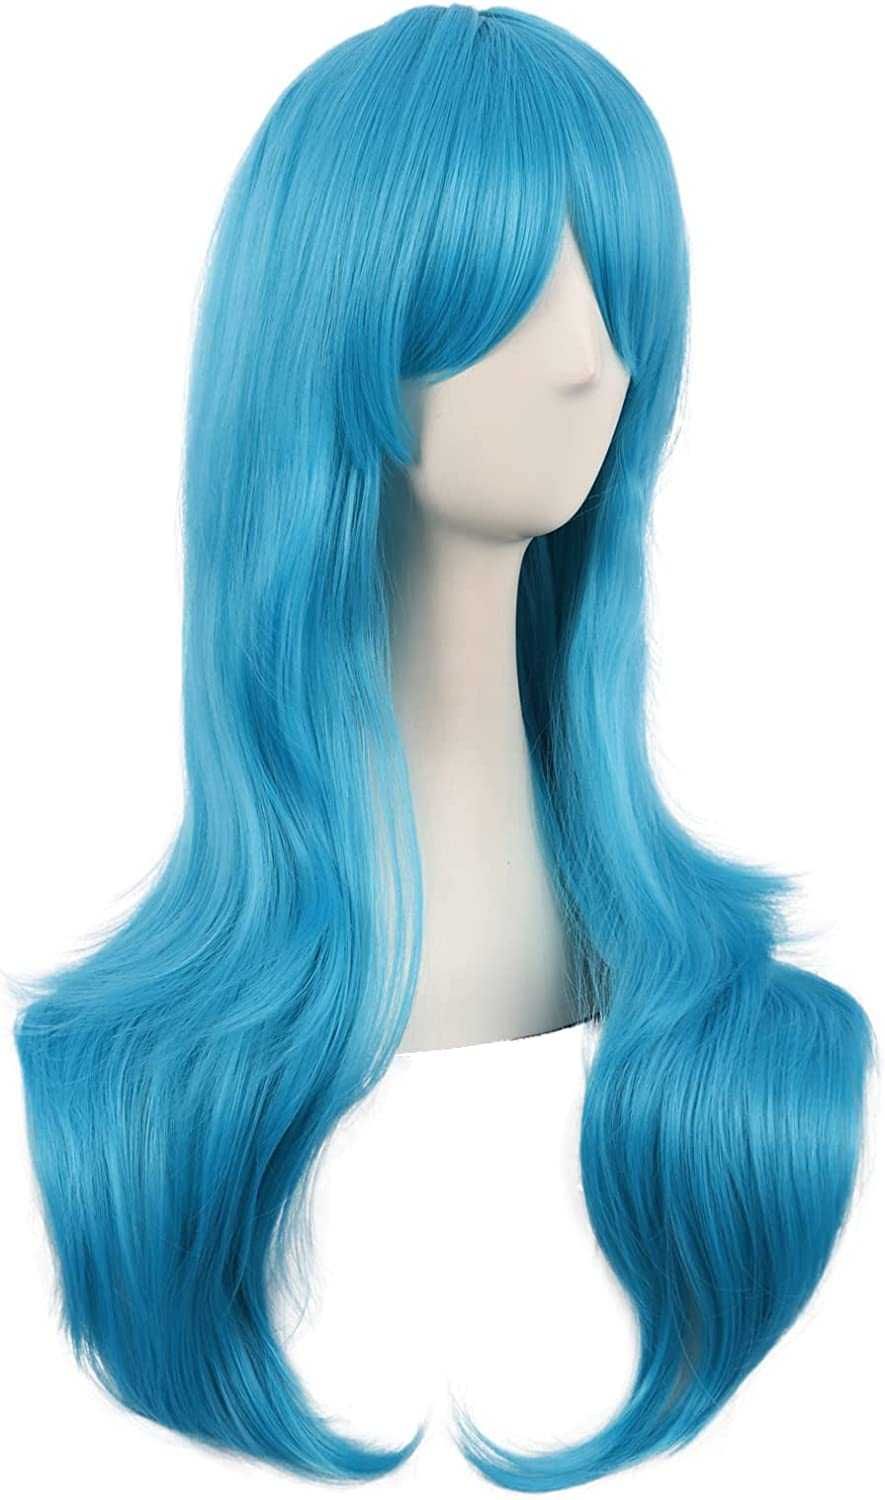 Peruca de cabelo longo de cor azul, nova